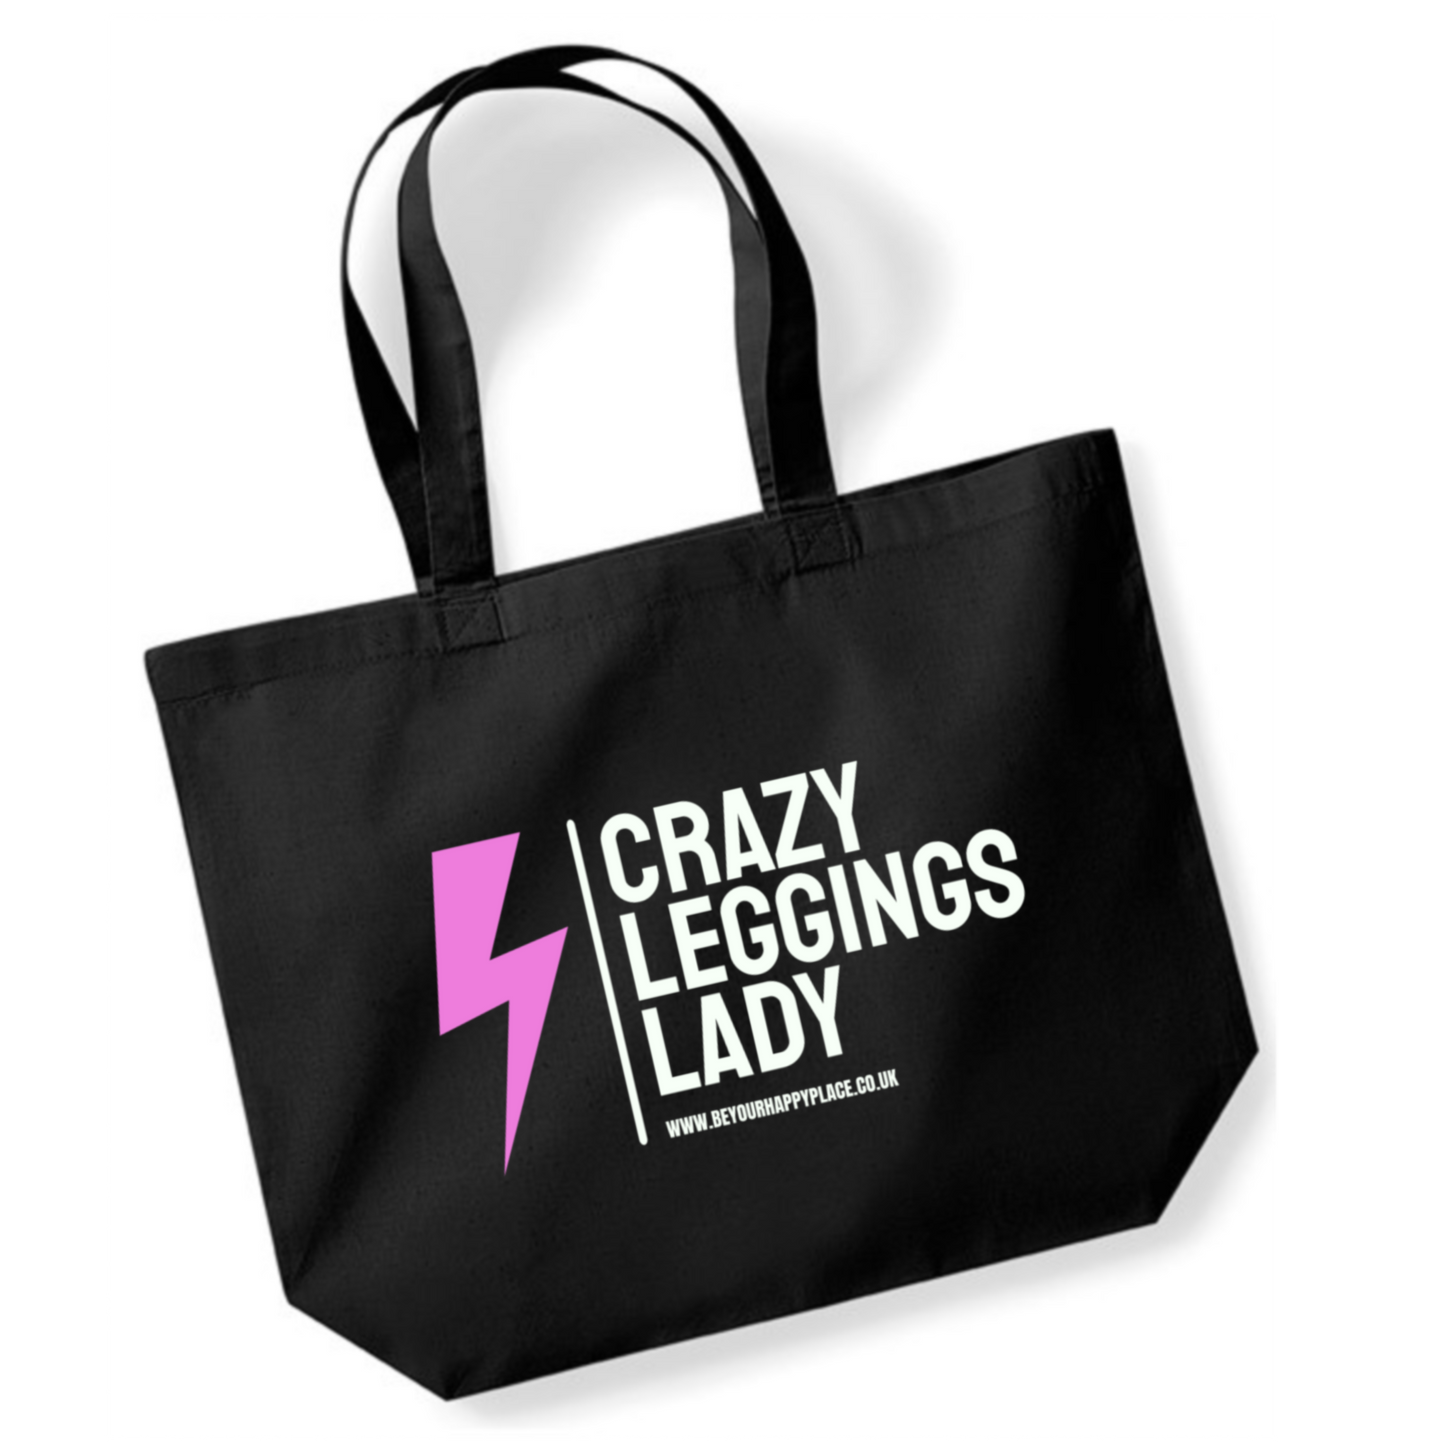 Crazy Leggings Lady Logo Canvas Tote Bag